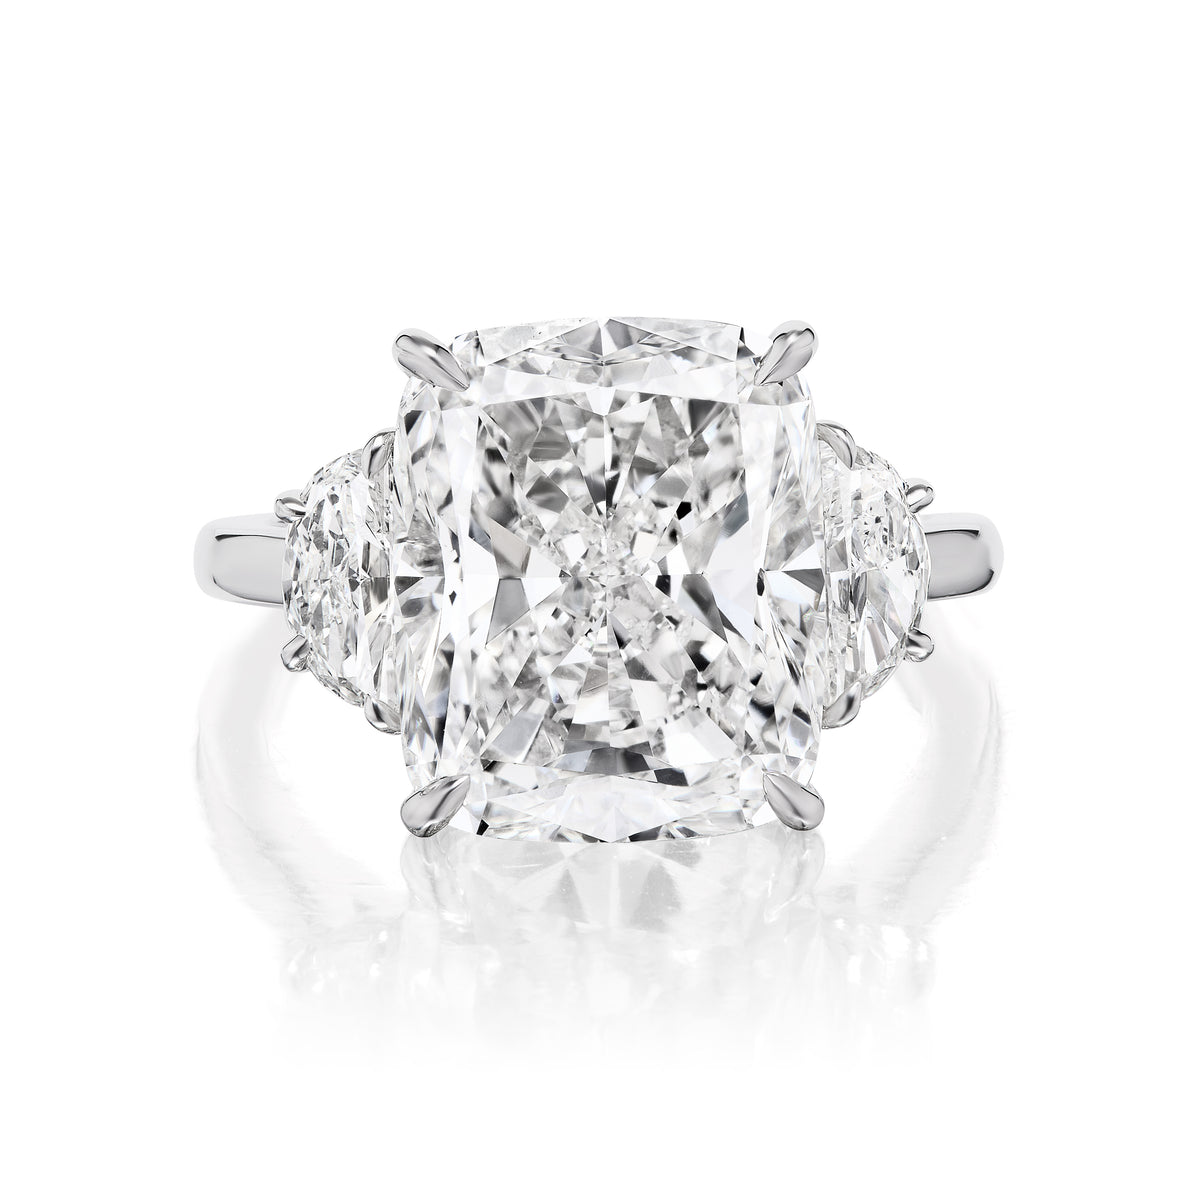 Cushion Cut Diamond Engagement Ring with Half Moon Side Stones